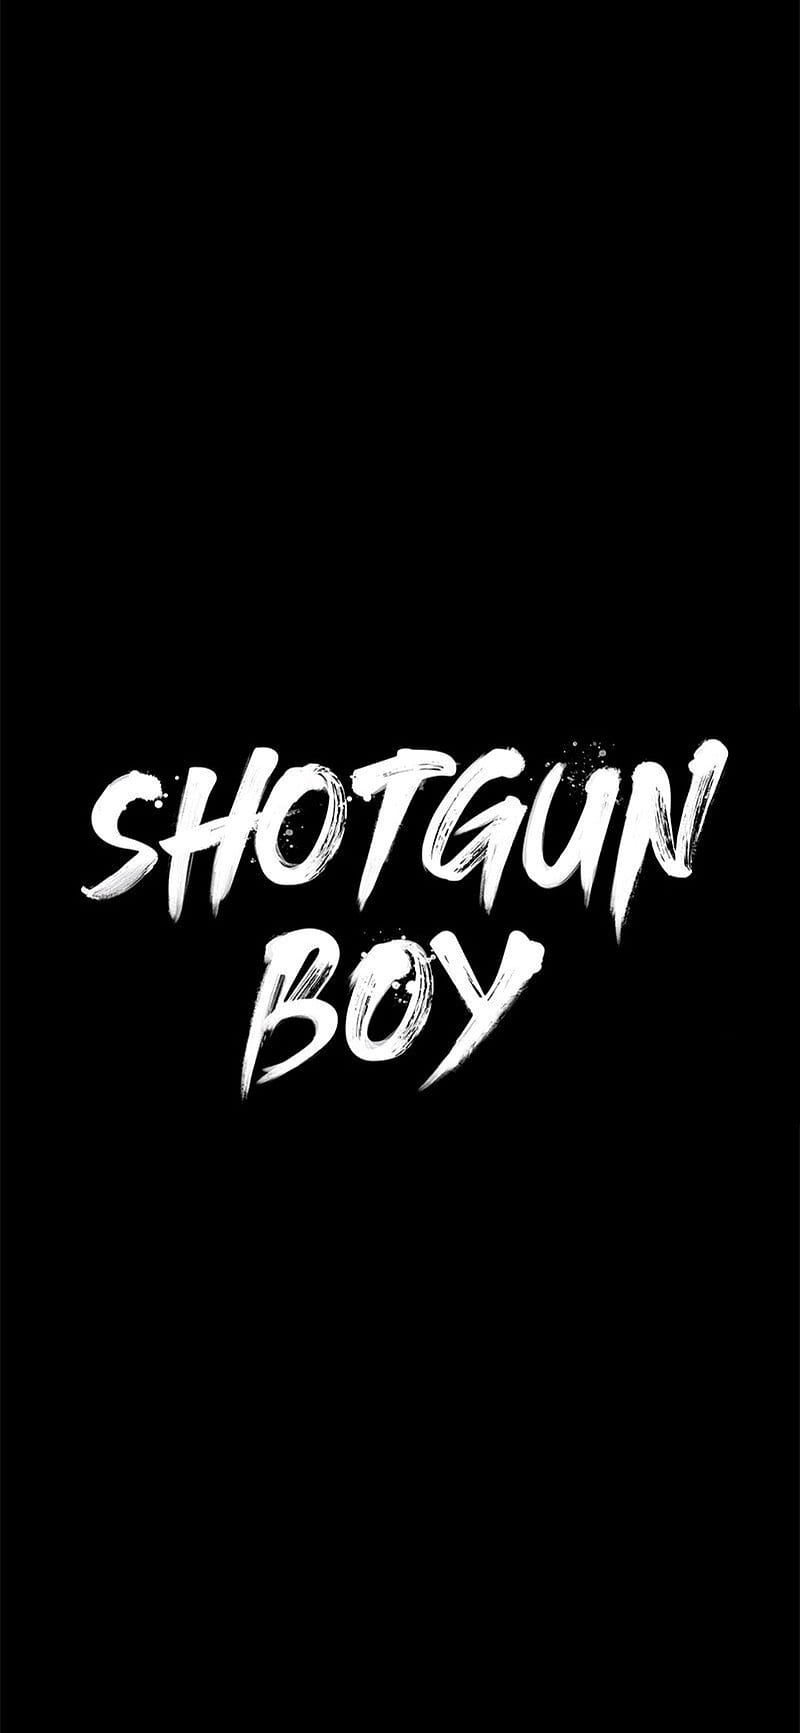 Shotgun boy